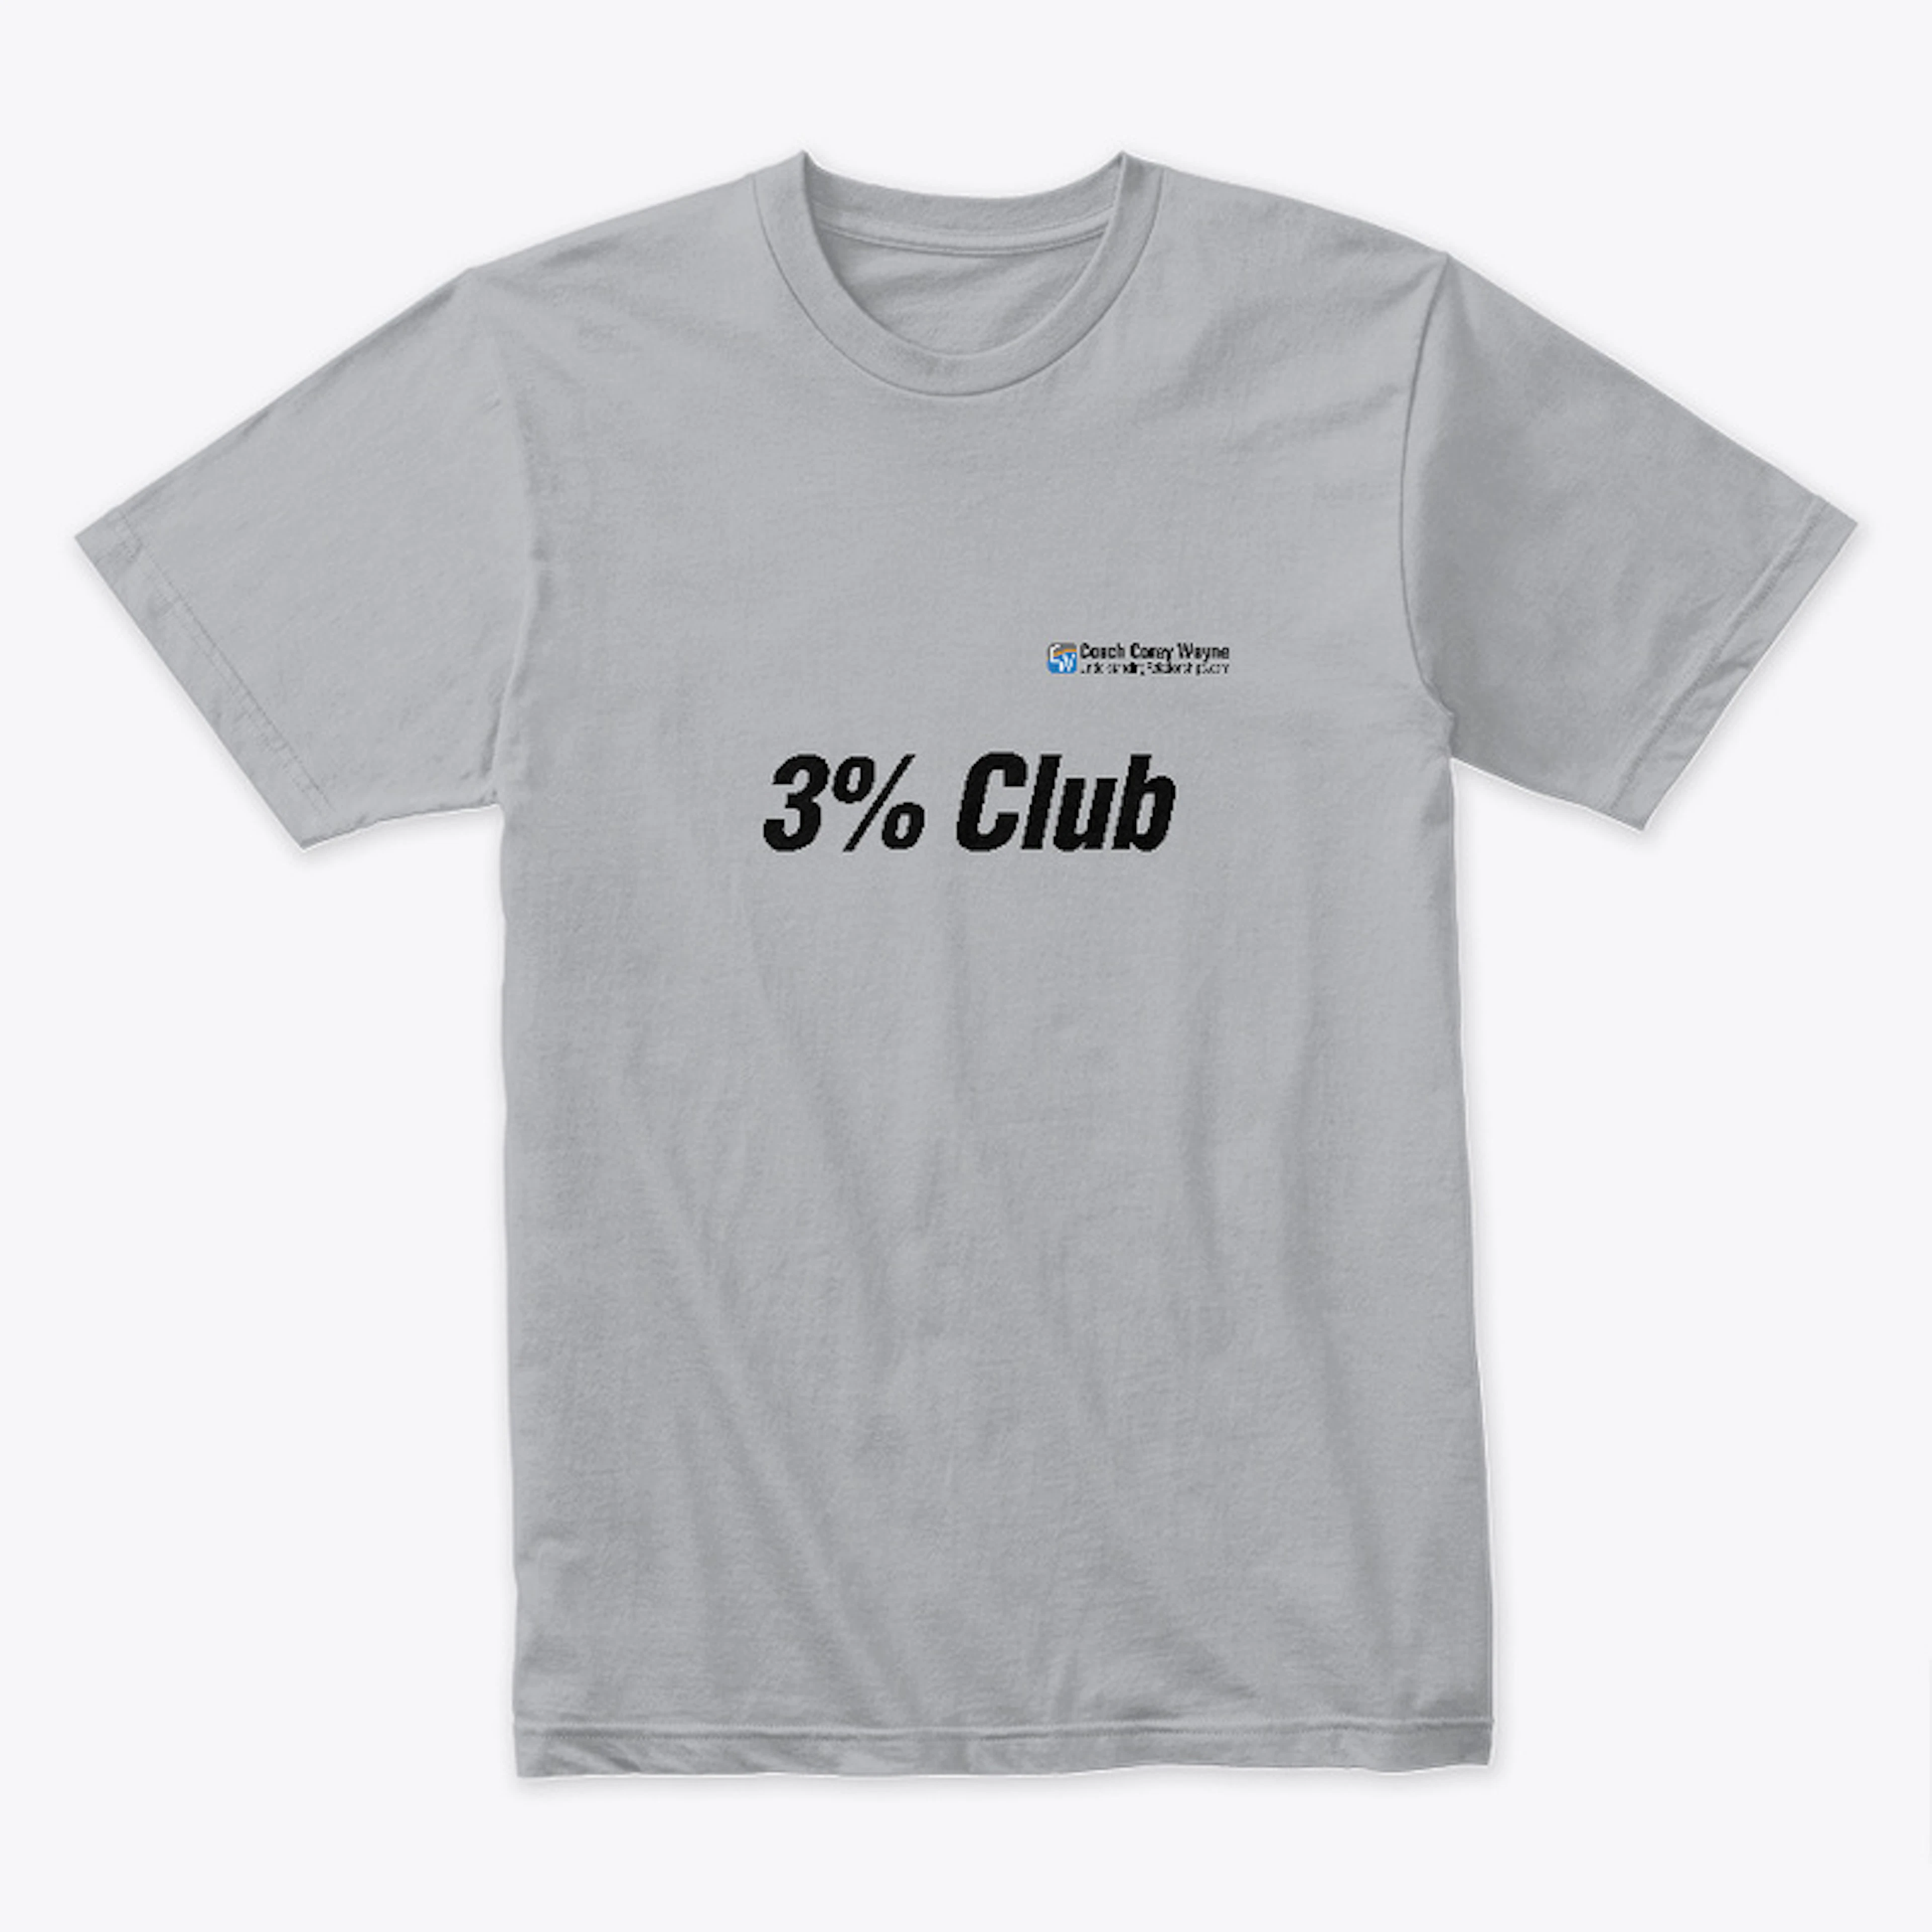 "3% Club" Text Logo Tee